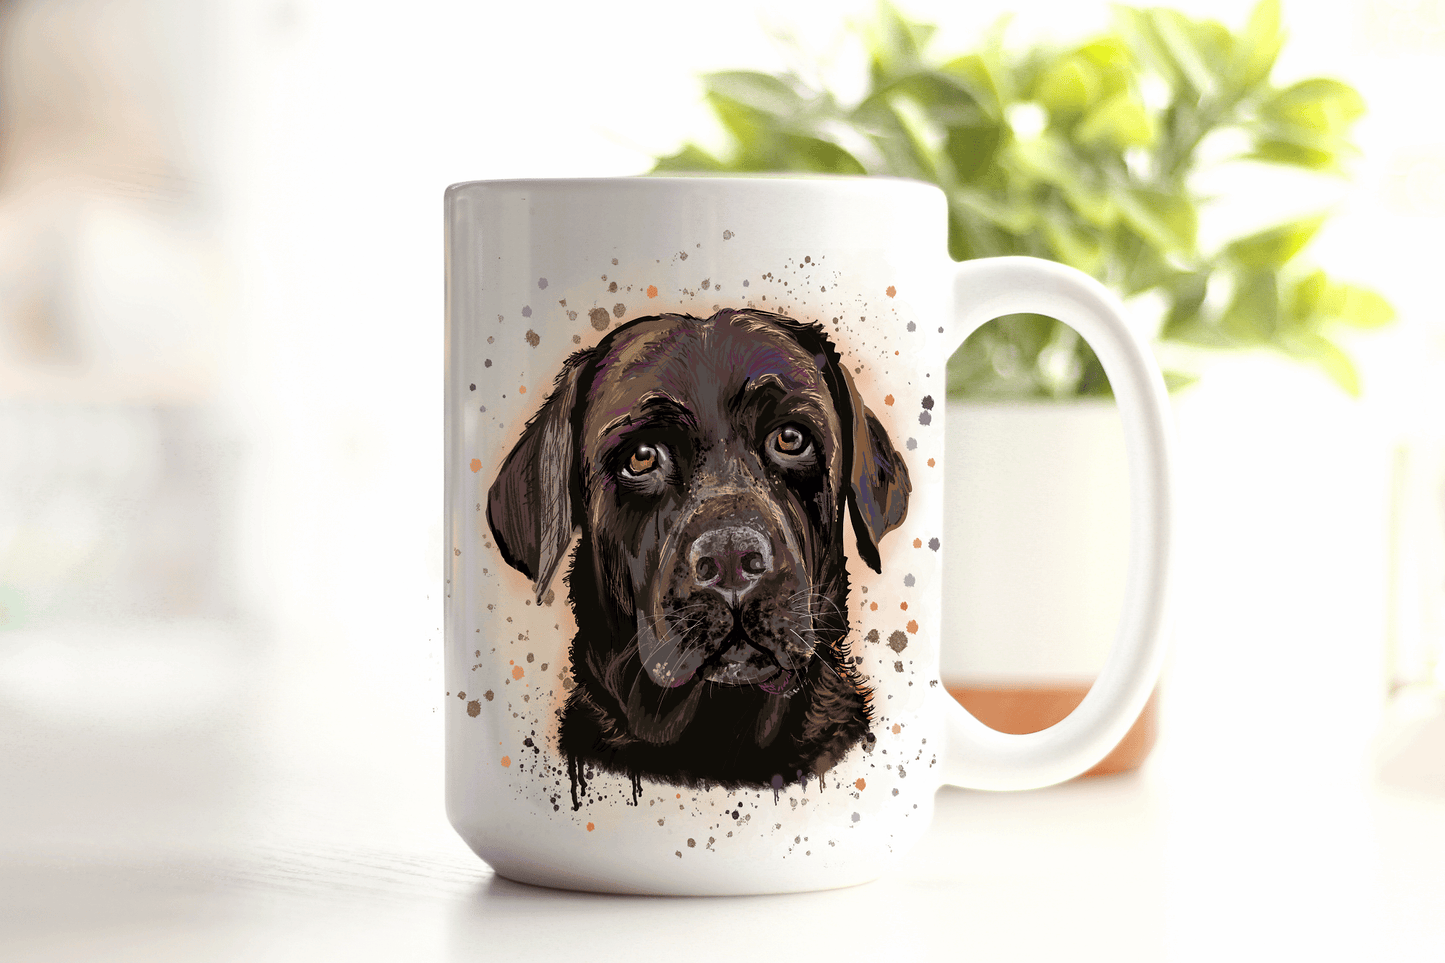  Chocolate Labrador Dog and Splashes Mug by Free Spirit Accessories sold by Free Spirit Accessories